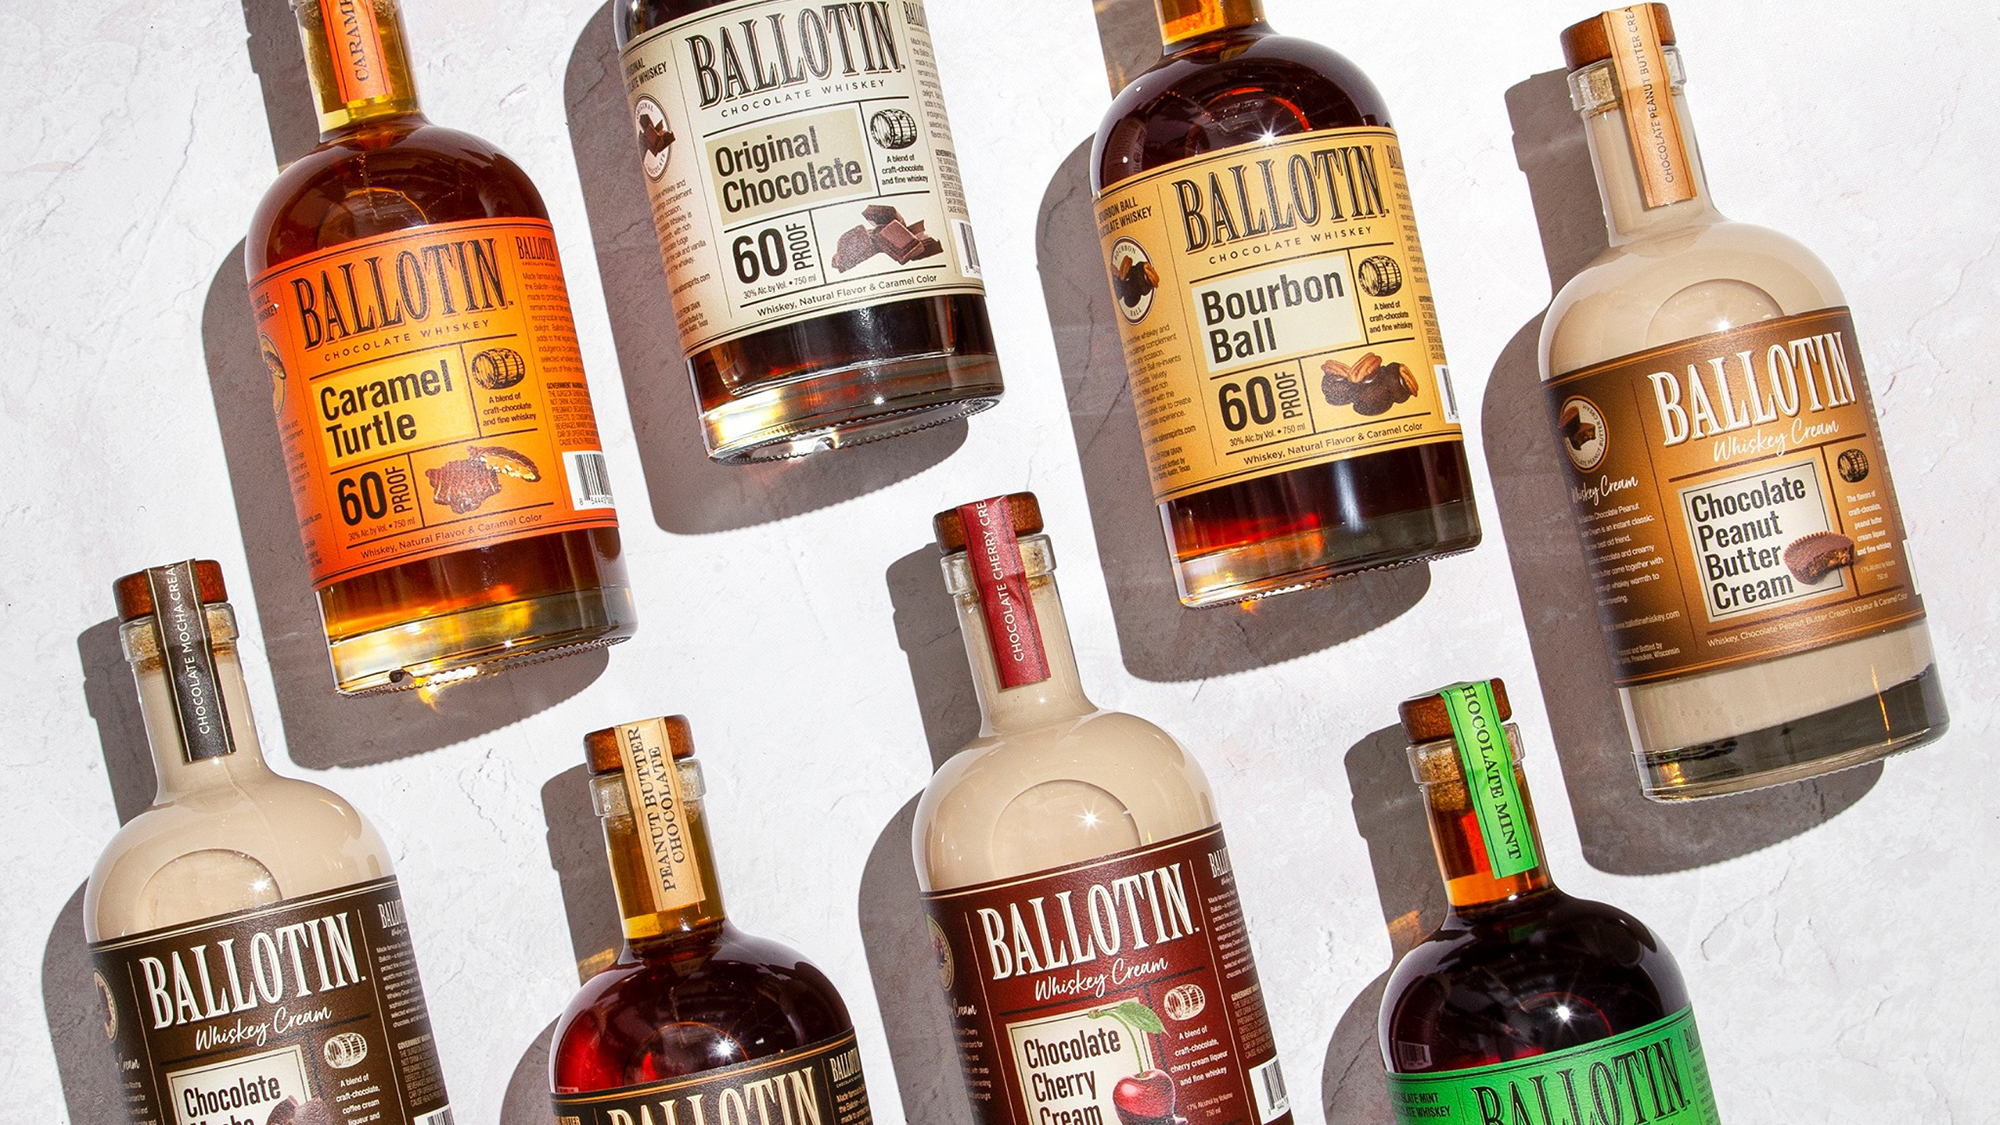 Ballotin Chocolate Whiskey varieties